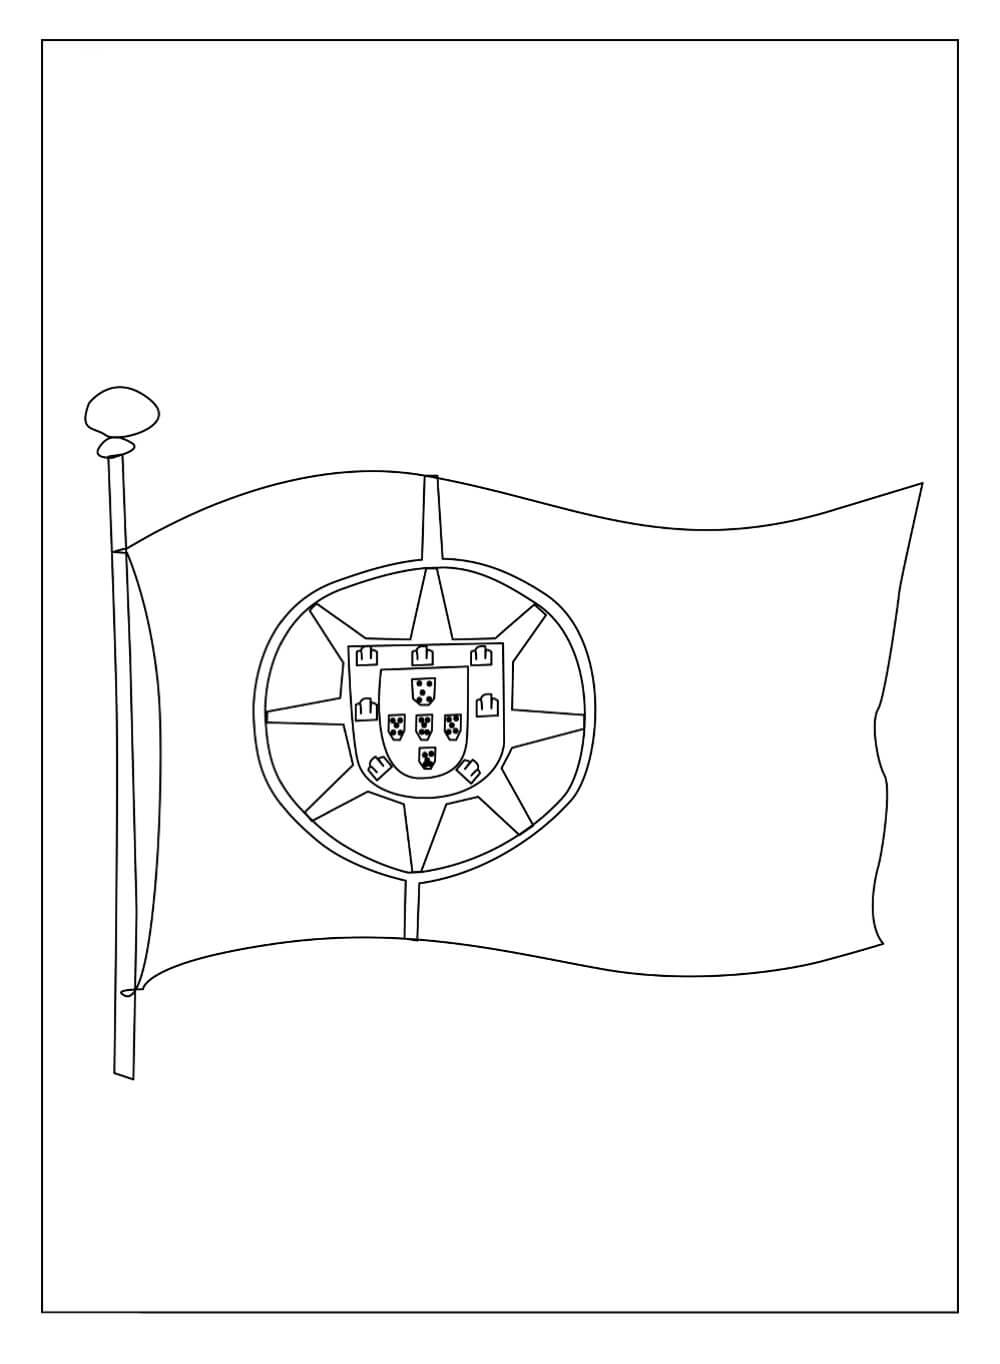 Desenhos de Incrível Bandeira de Portugal para colorir